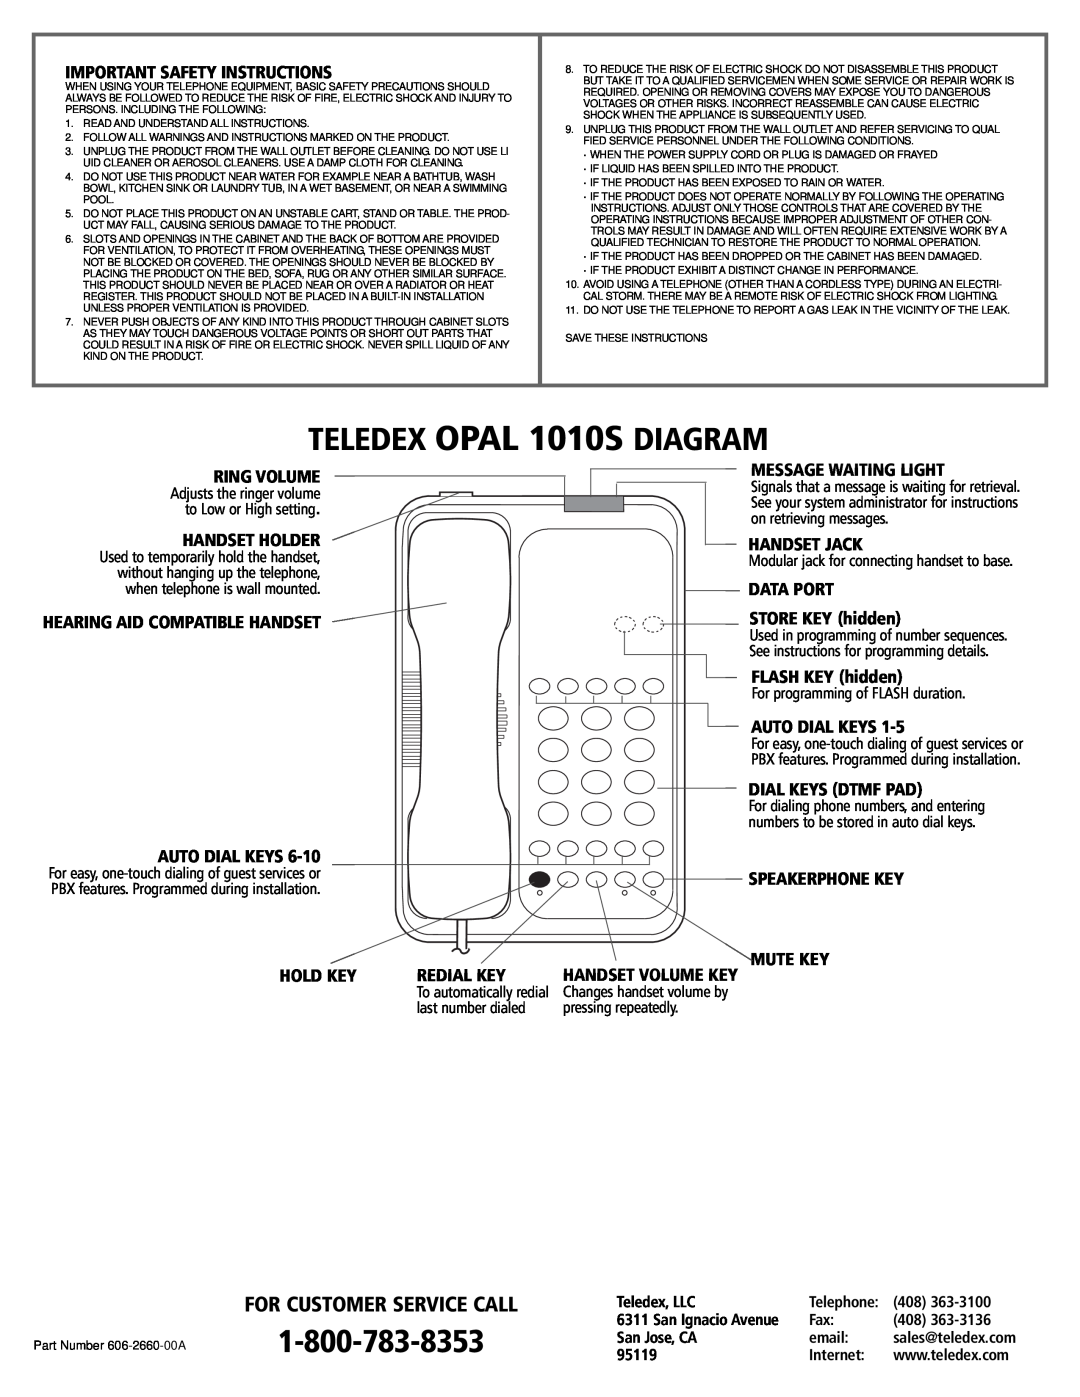 Teledex TELEDEX OPAL 1010S DIAGRAM, Modular jack for connecting handset to base, For programming of FLASH duration 